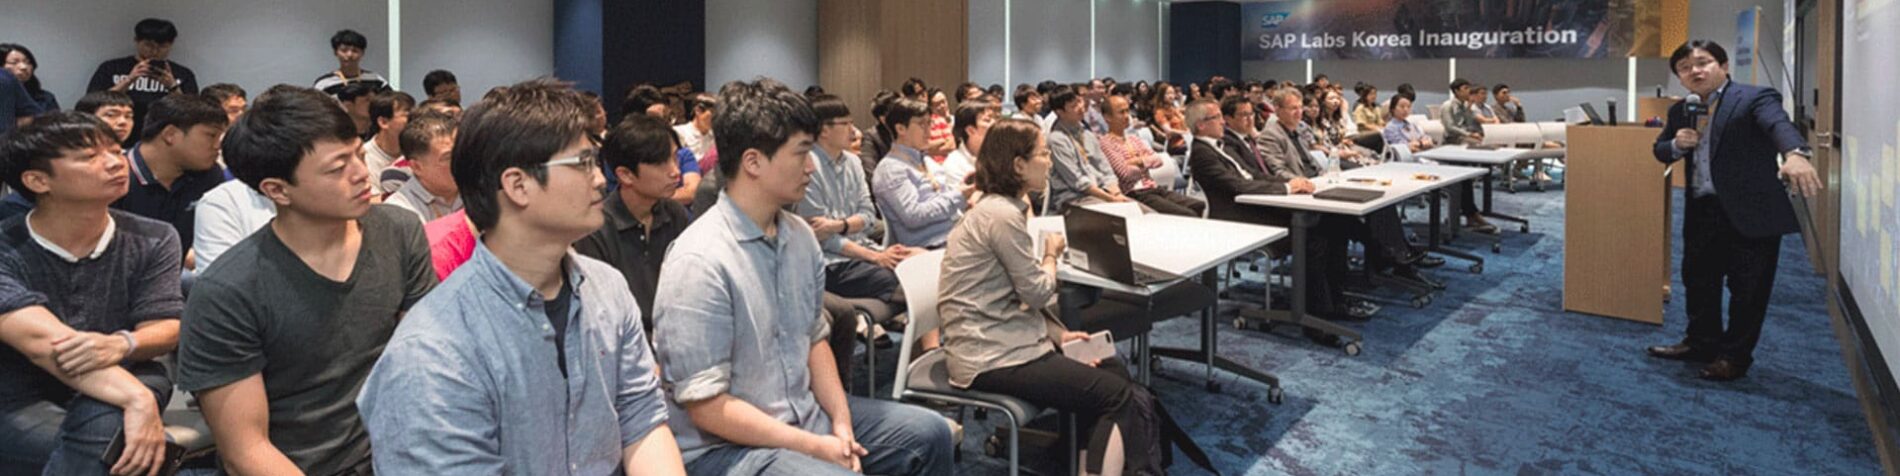 SAP Labs Korea: A Cornerstone of SAP HANA